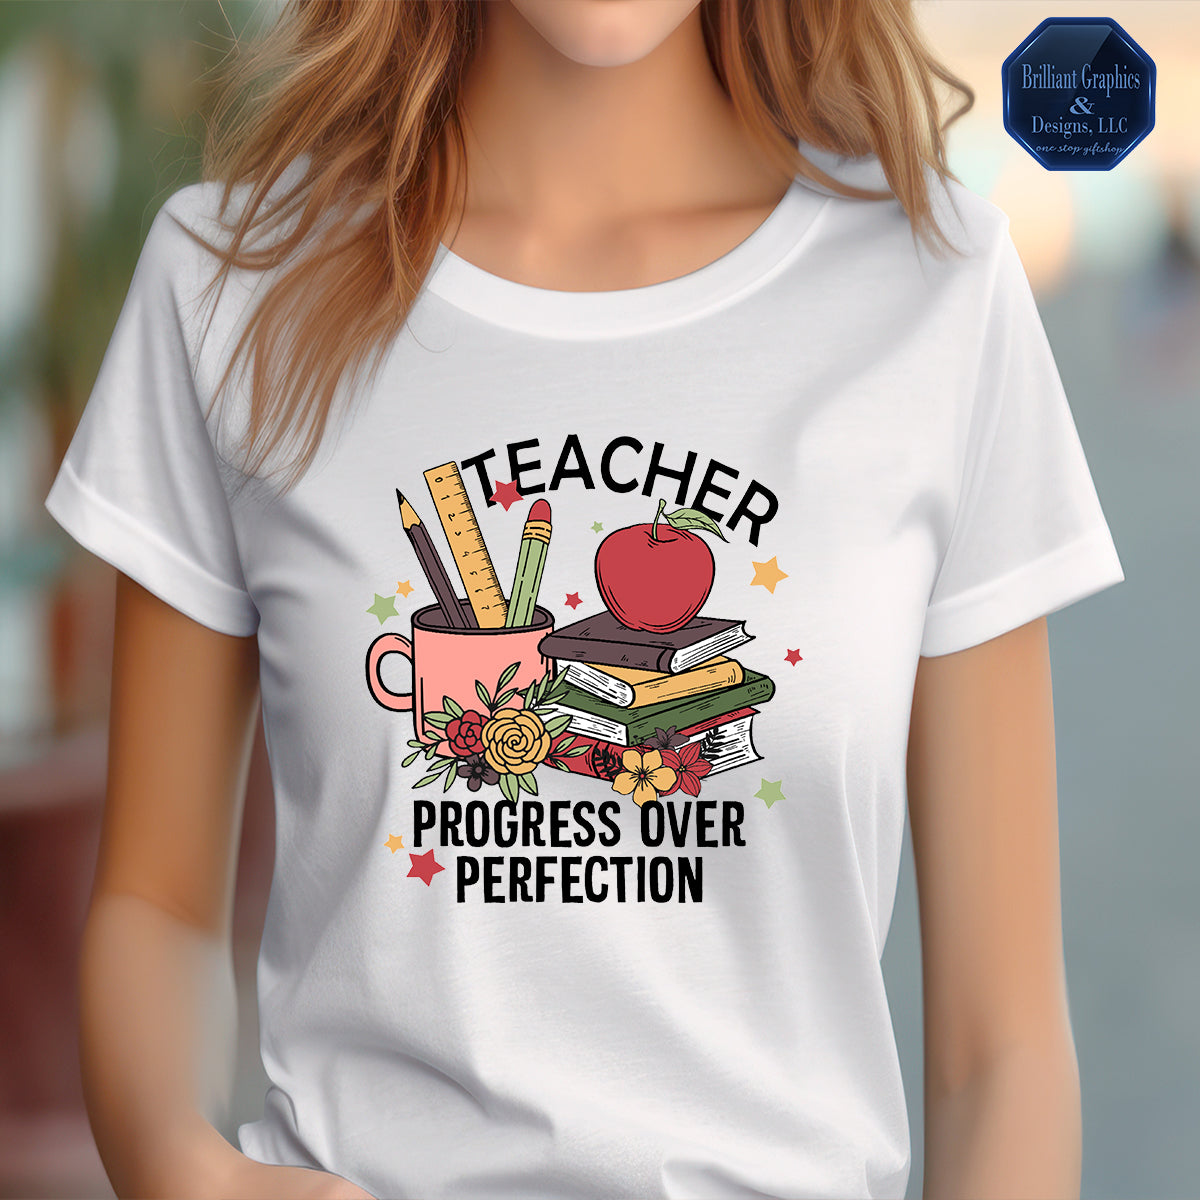 Teacher, Progress Over Perfection: Empowering T-Shirt for Educators